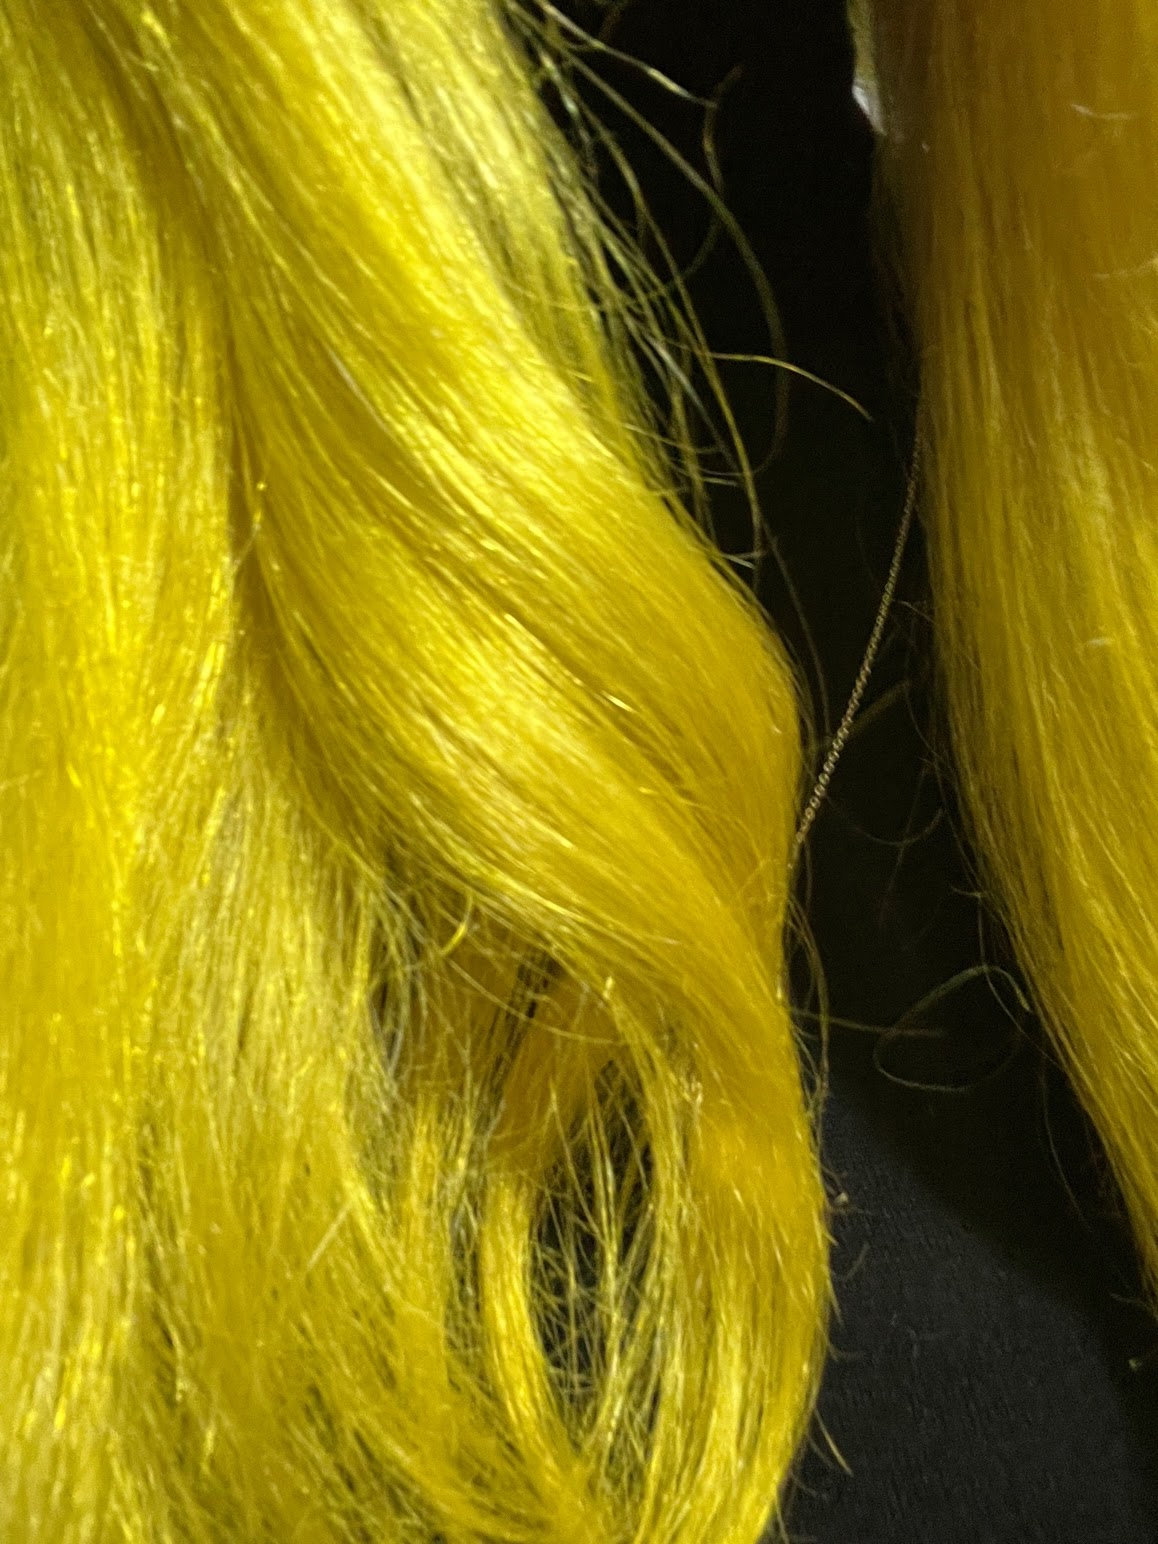 Bleach London Twisted Lemon freshly dyed on long wavy hair